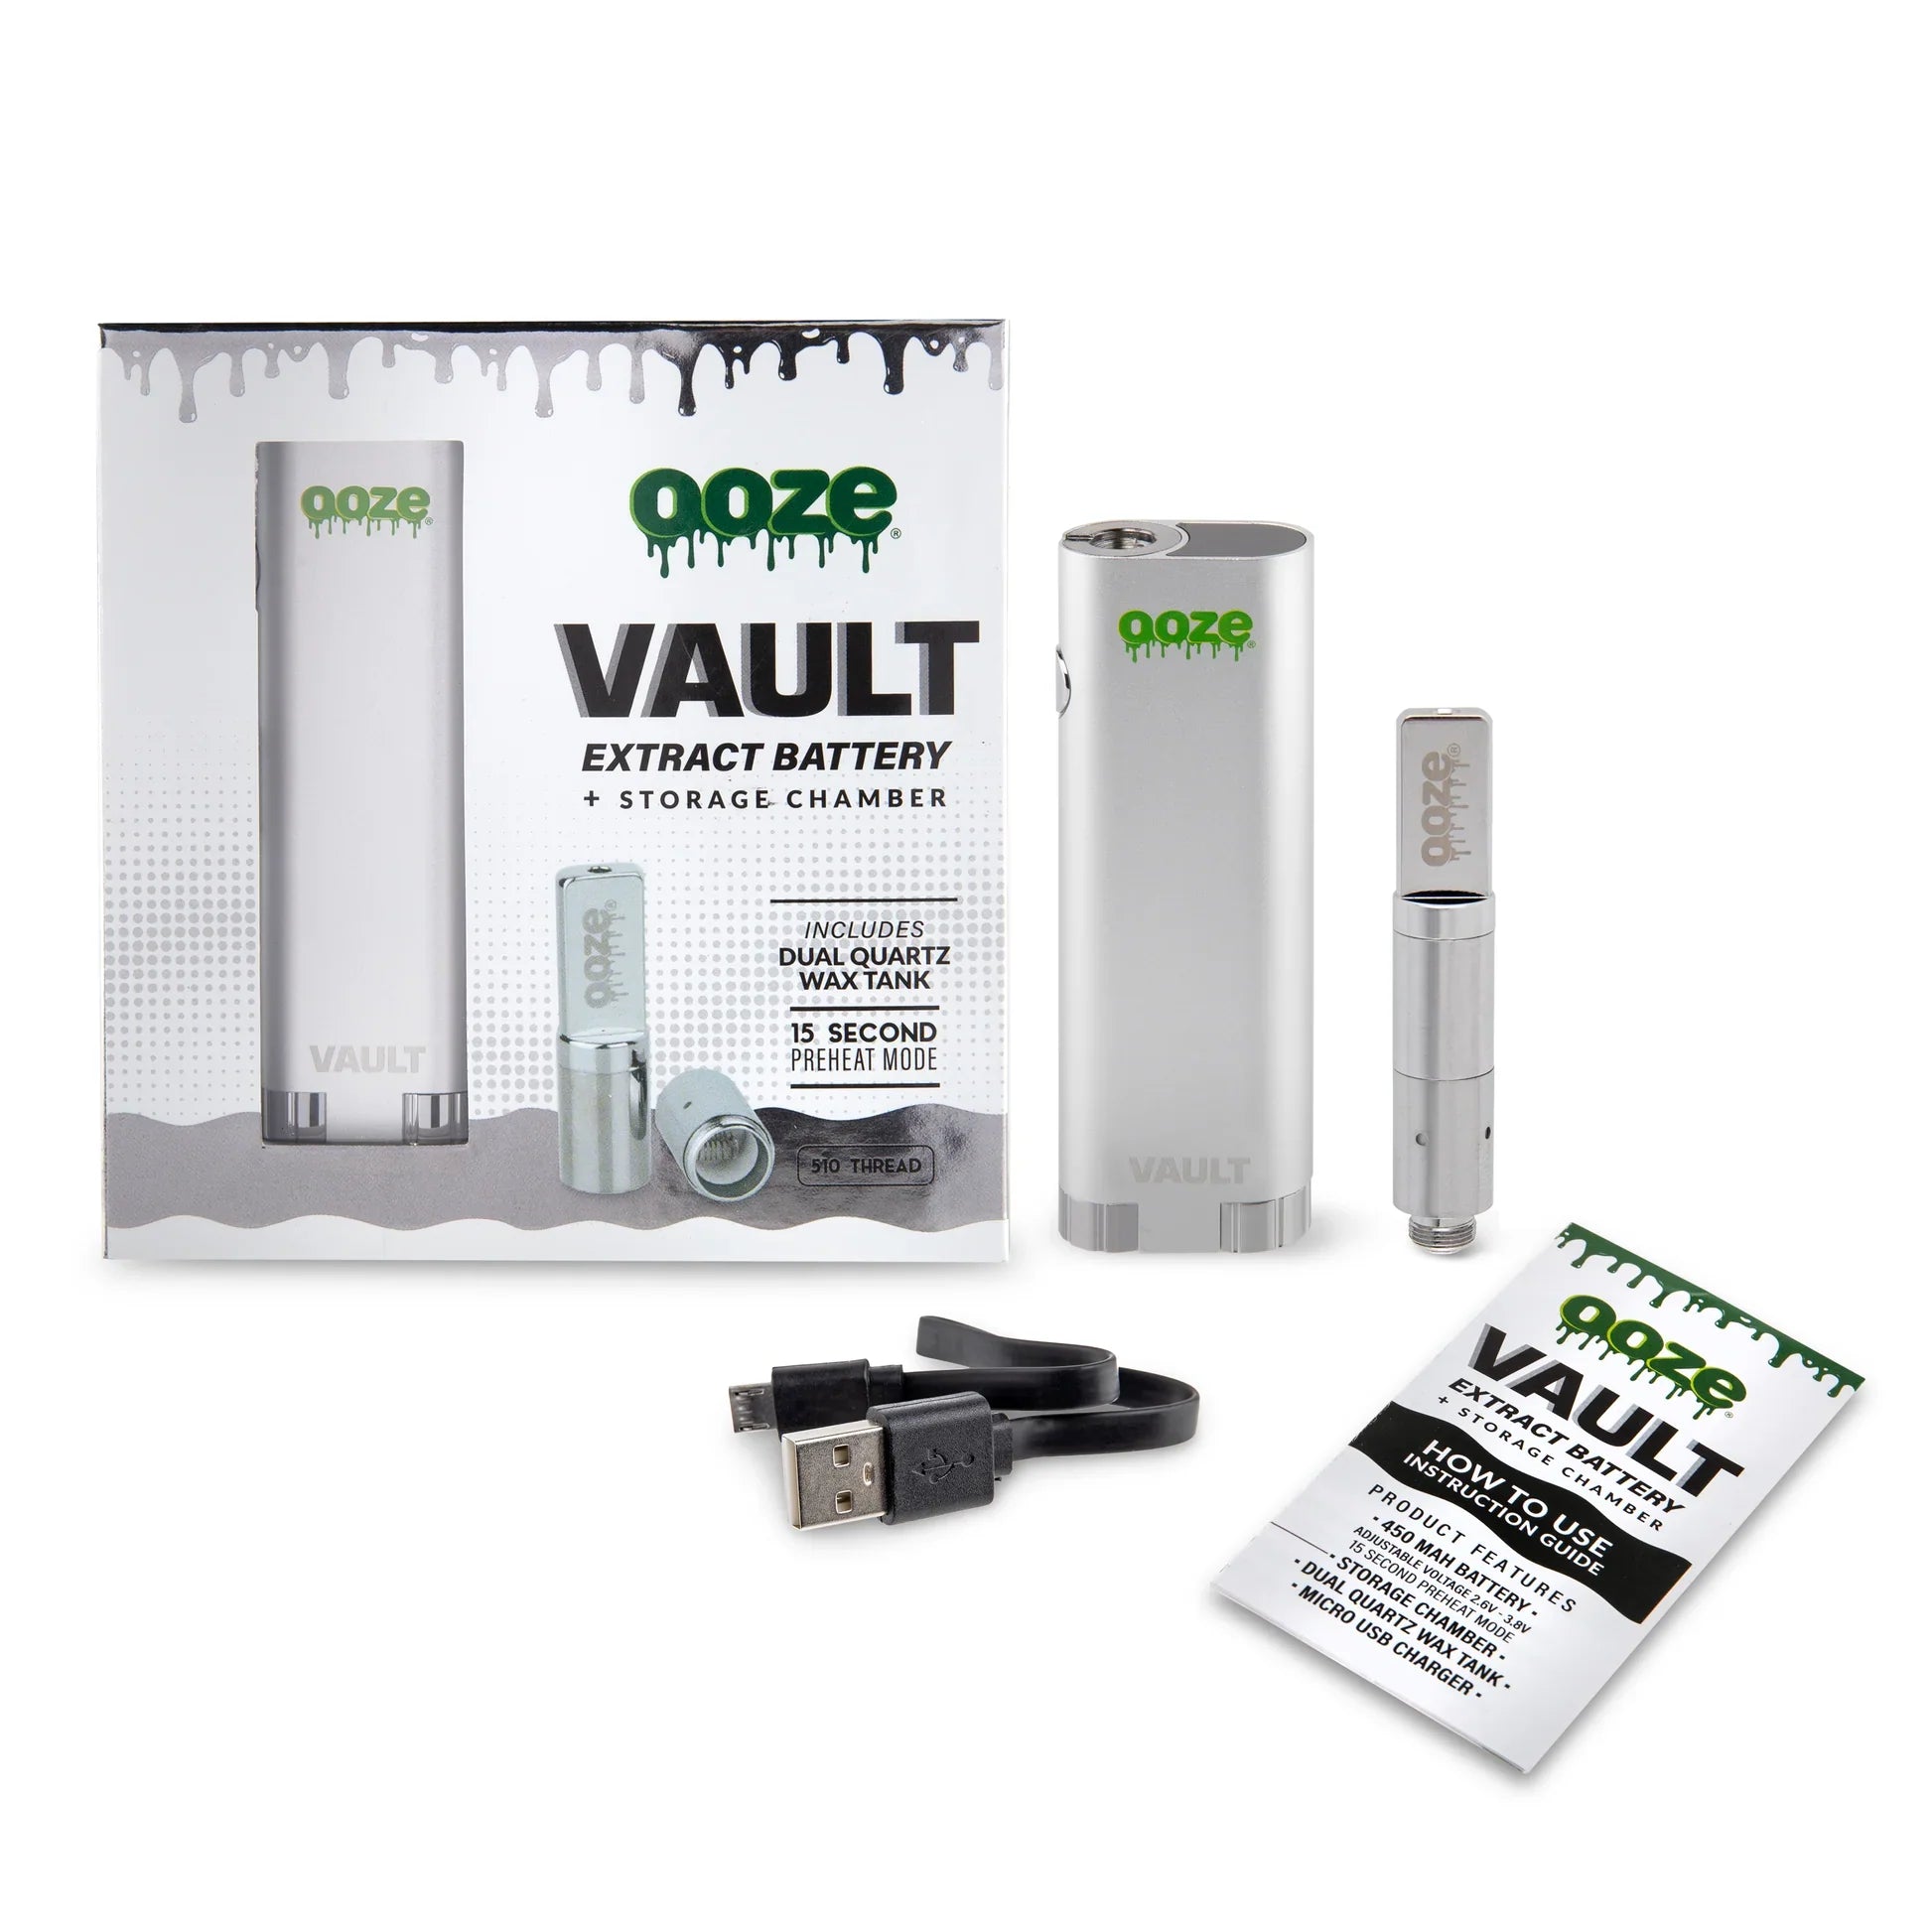 Ooze Vault Portable Vaporizer Battery Stellar Silver